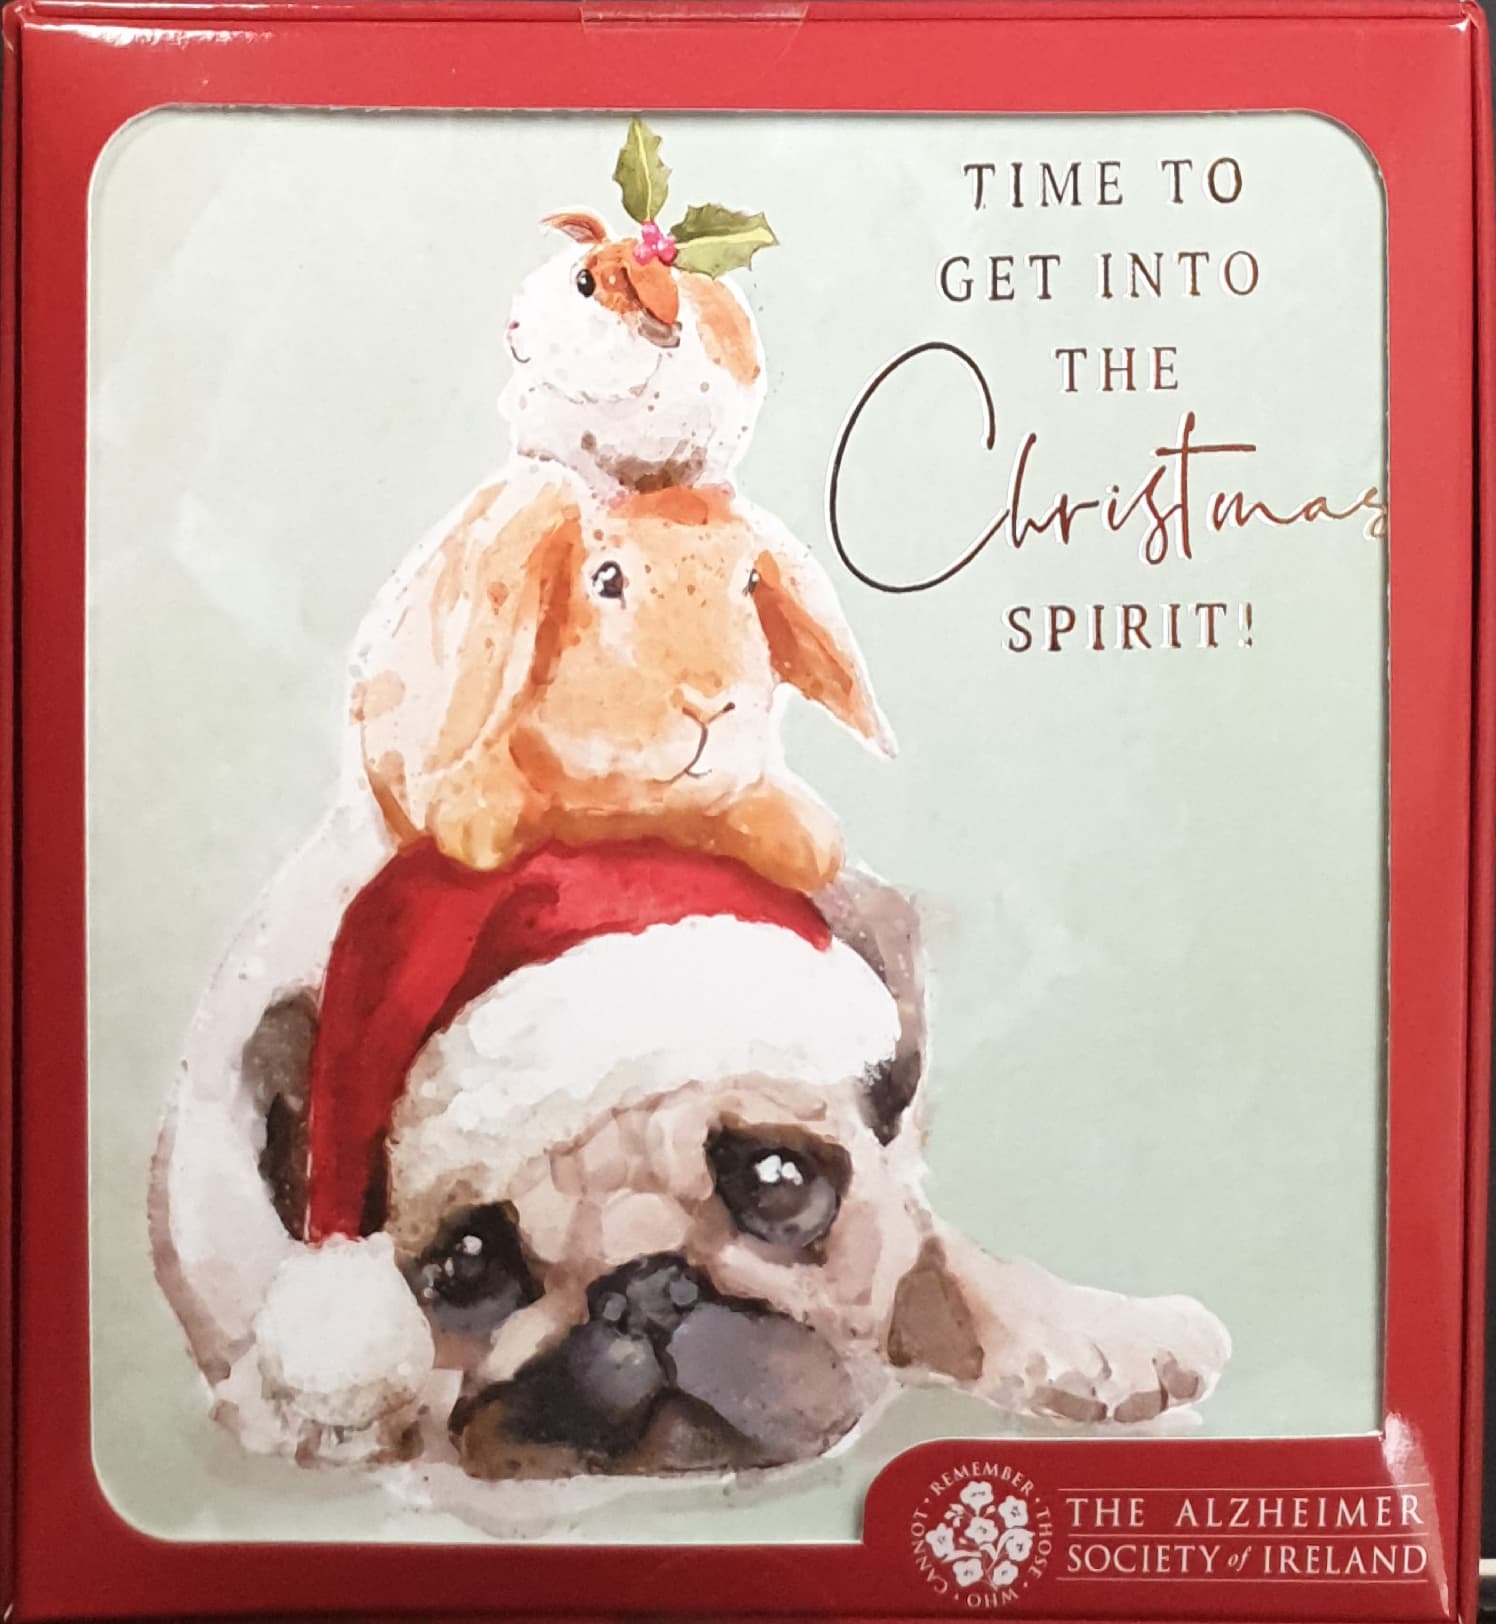 Charity Christmas Card (In Irish & English) - Box of 16 / Alzheimer Society of Ireland - Cute Pug, Rabbit & Guinea Pig